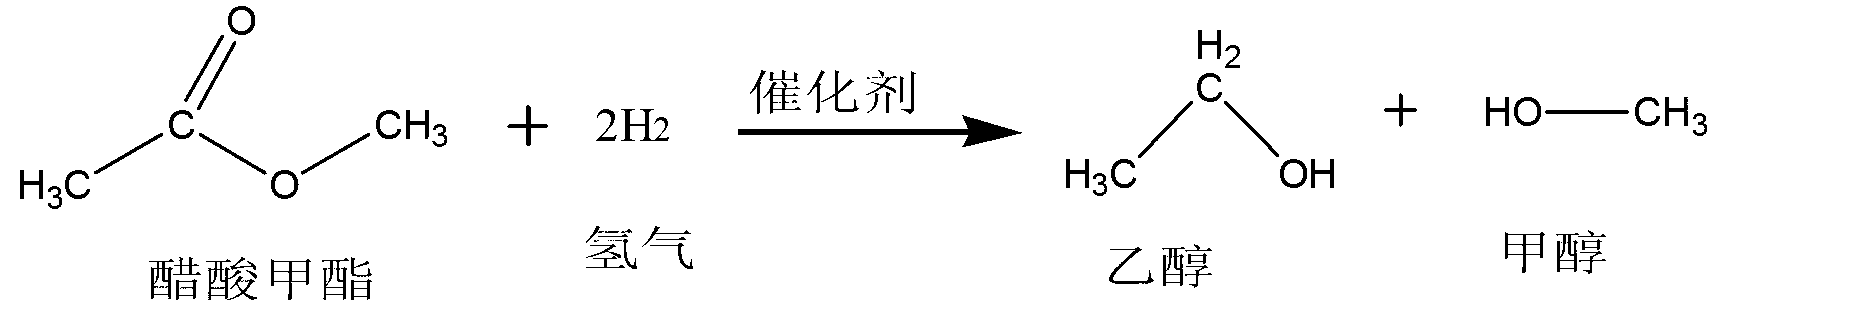 Method for preparing methanol and ethanol by methyl acetate by way of hydrogenation